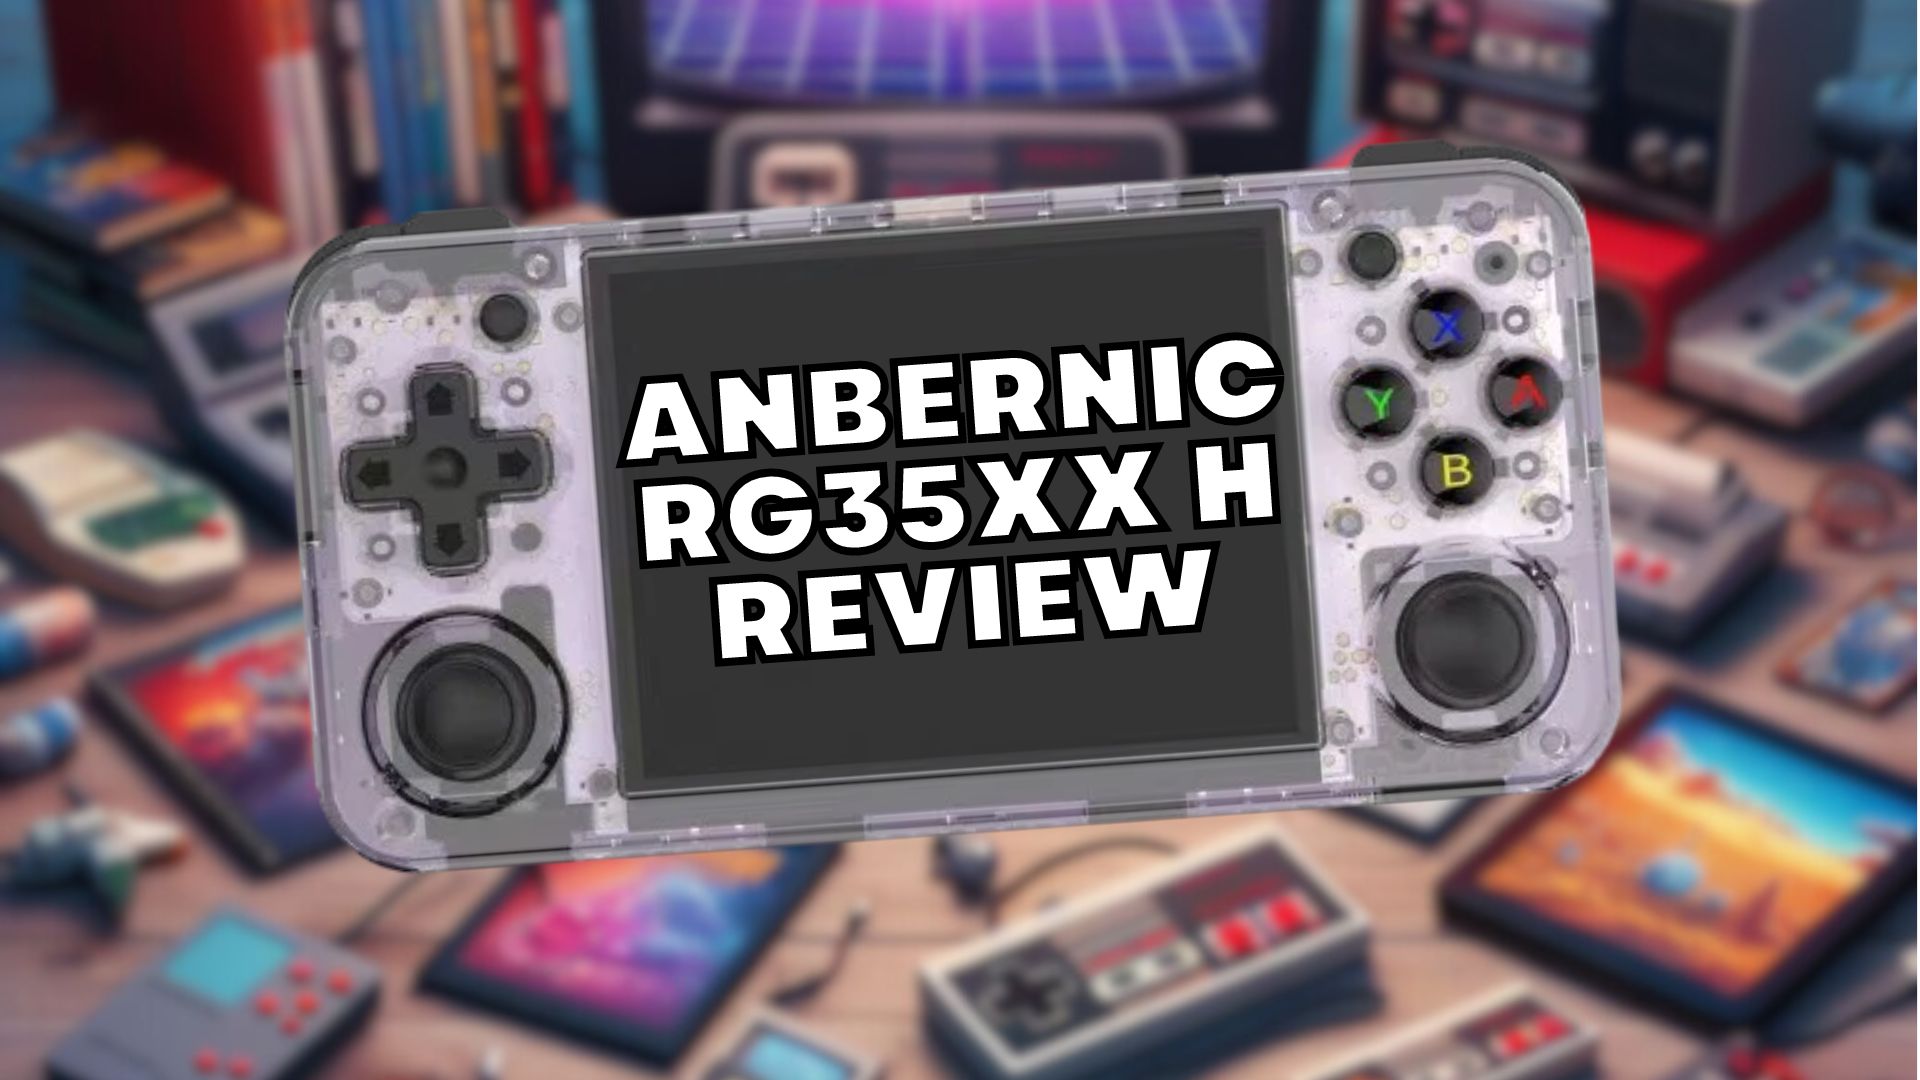 Anbernic RG35XX H anmeldelse med video - Fantastisk budget retro gaming håndholdt